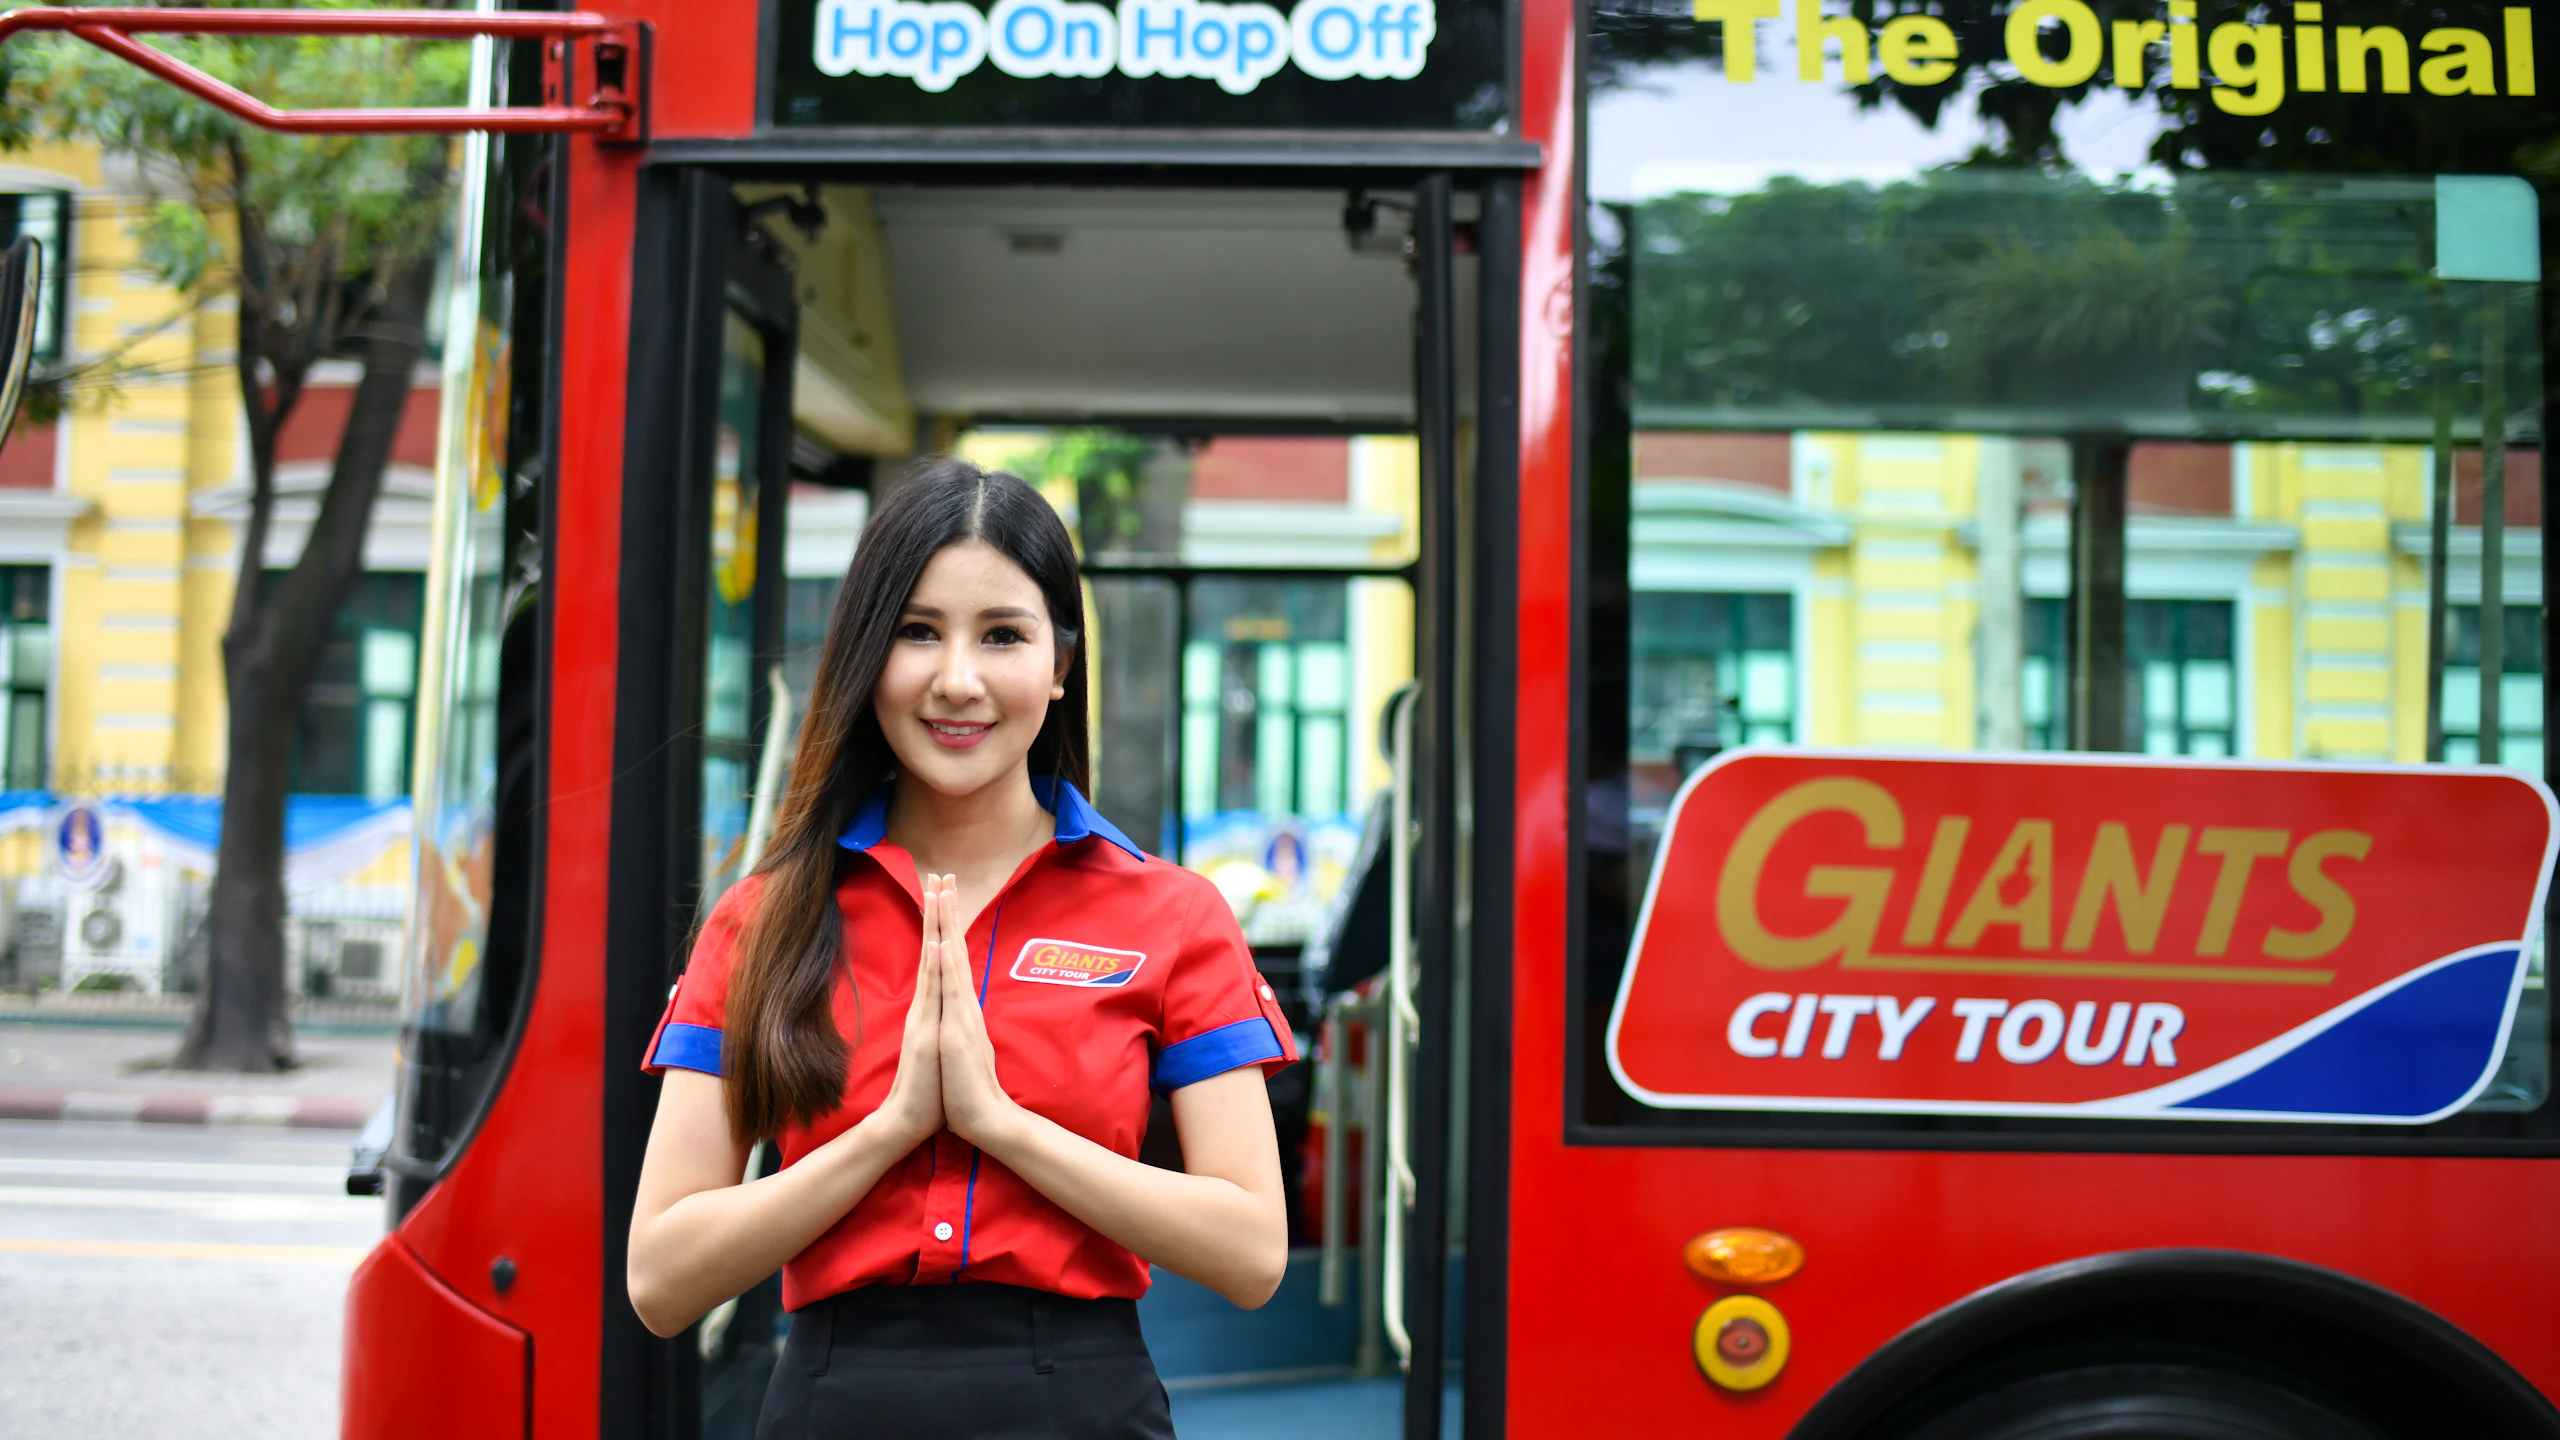 Hop on Hop off Bus Bangkok By Giants City Tour